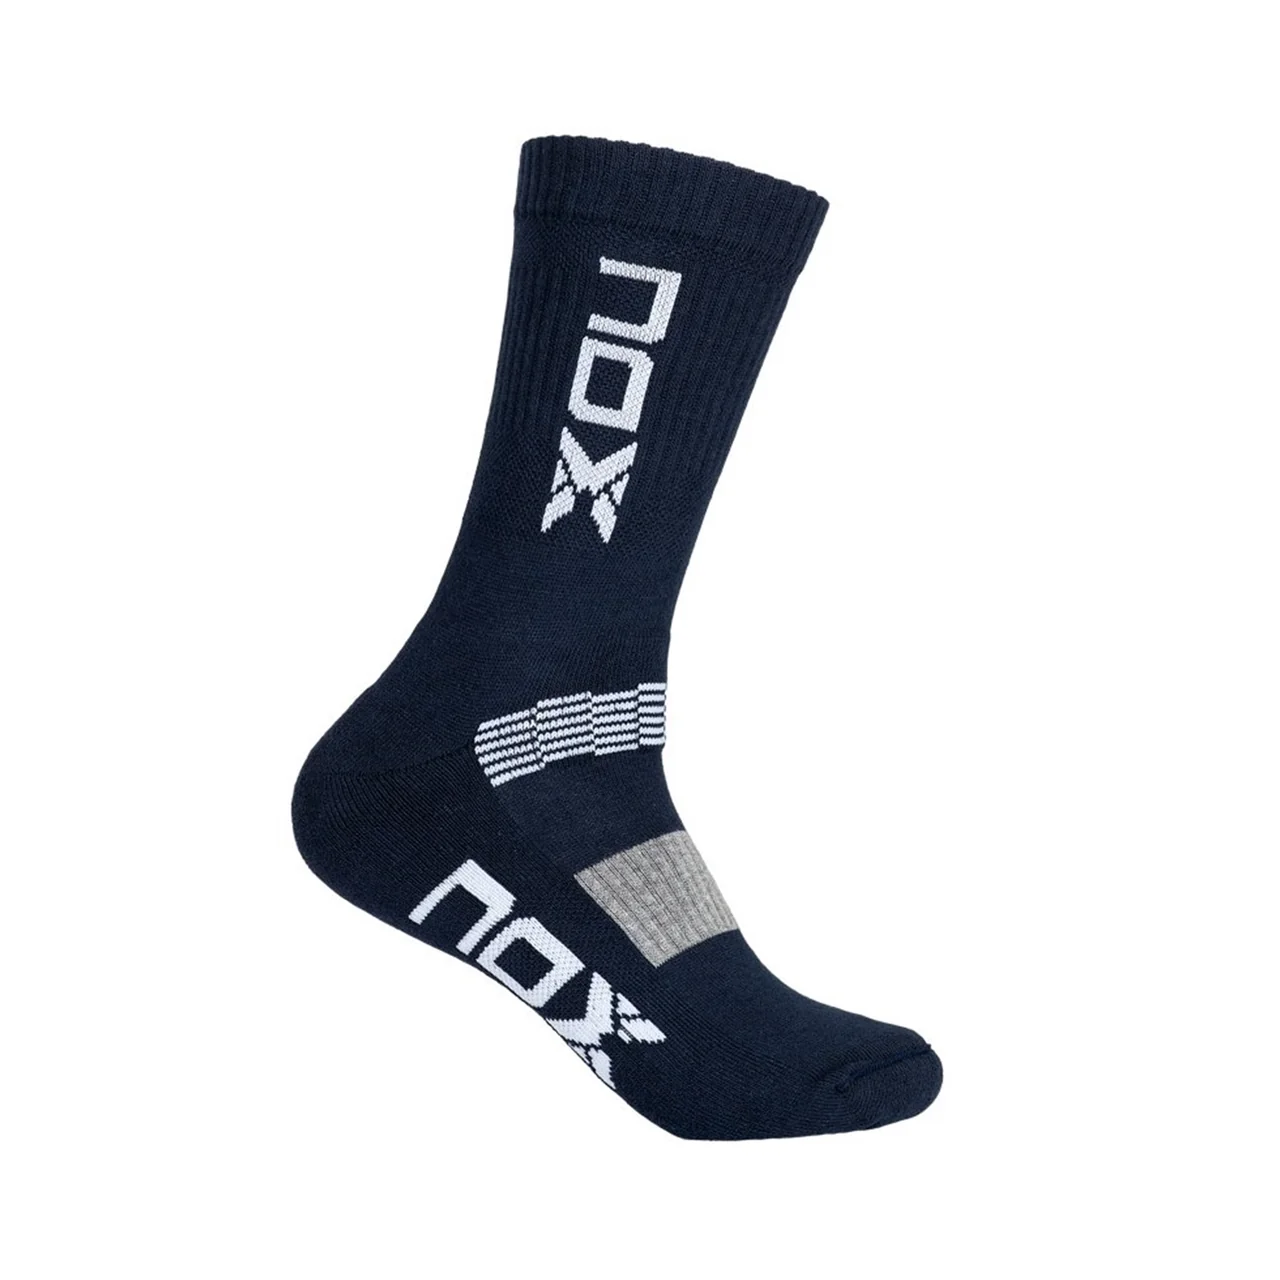 Nox Technical Socks 1pk Navy/White